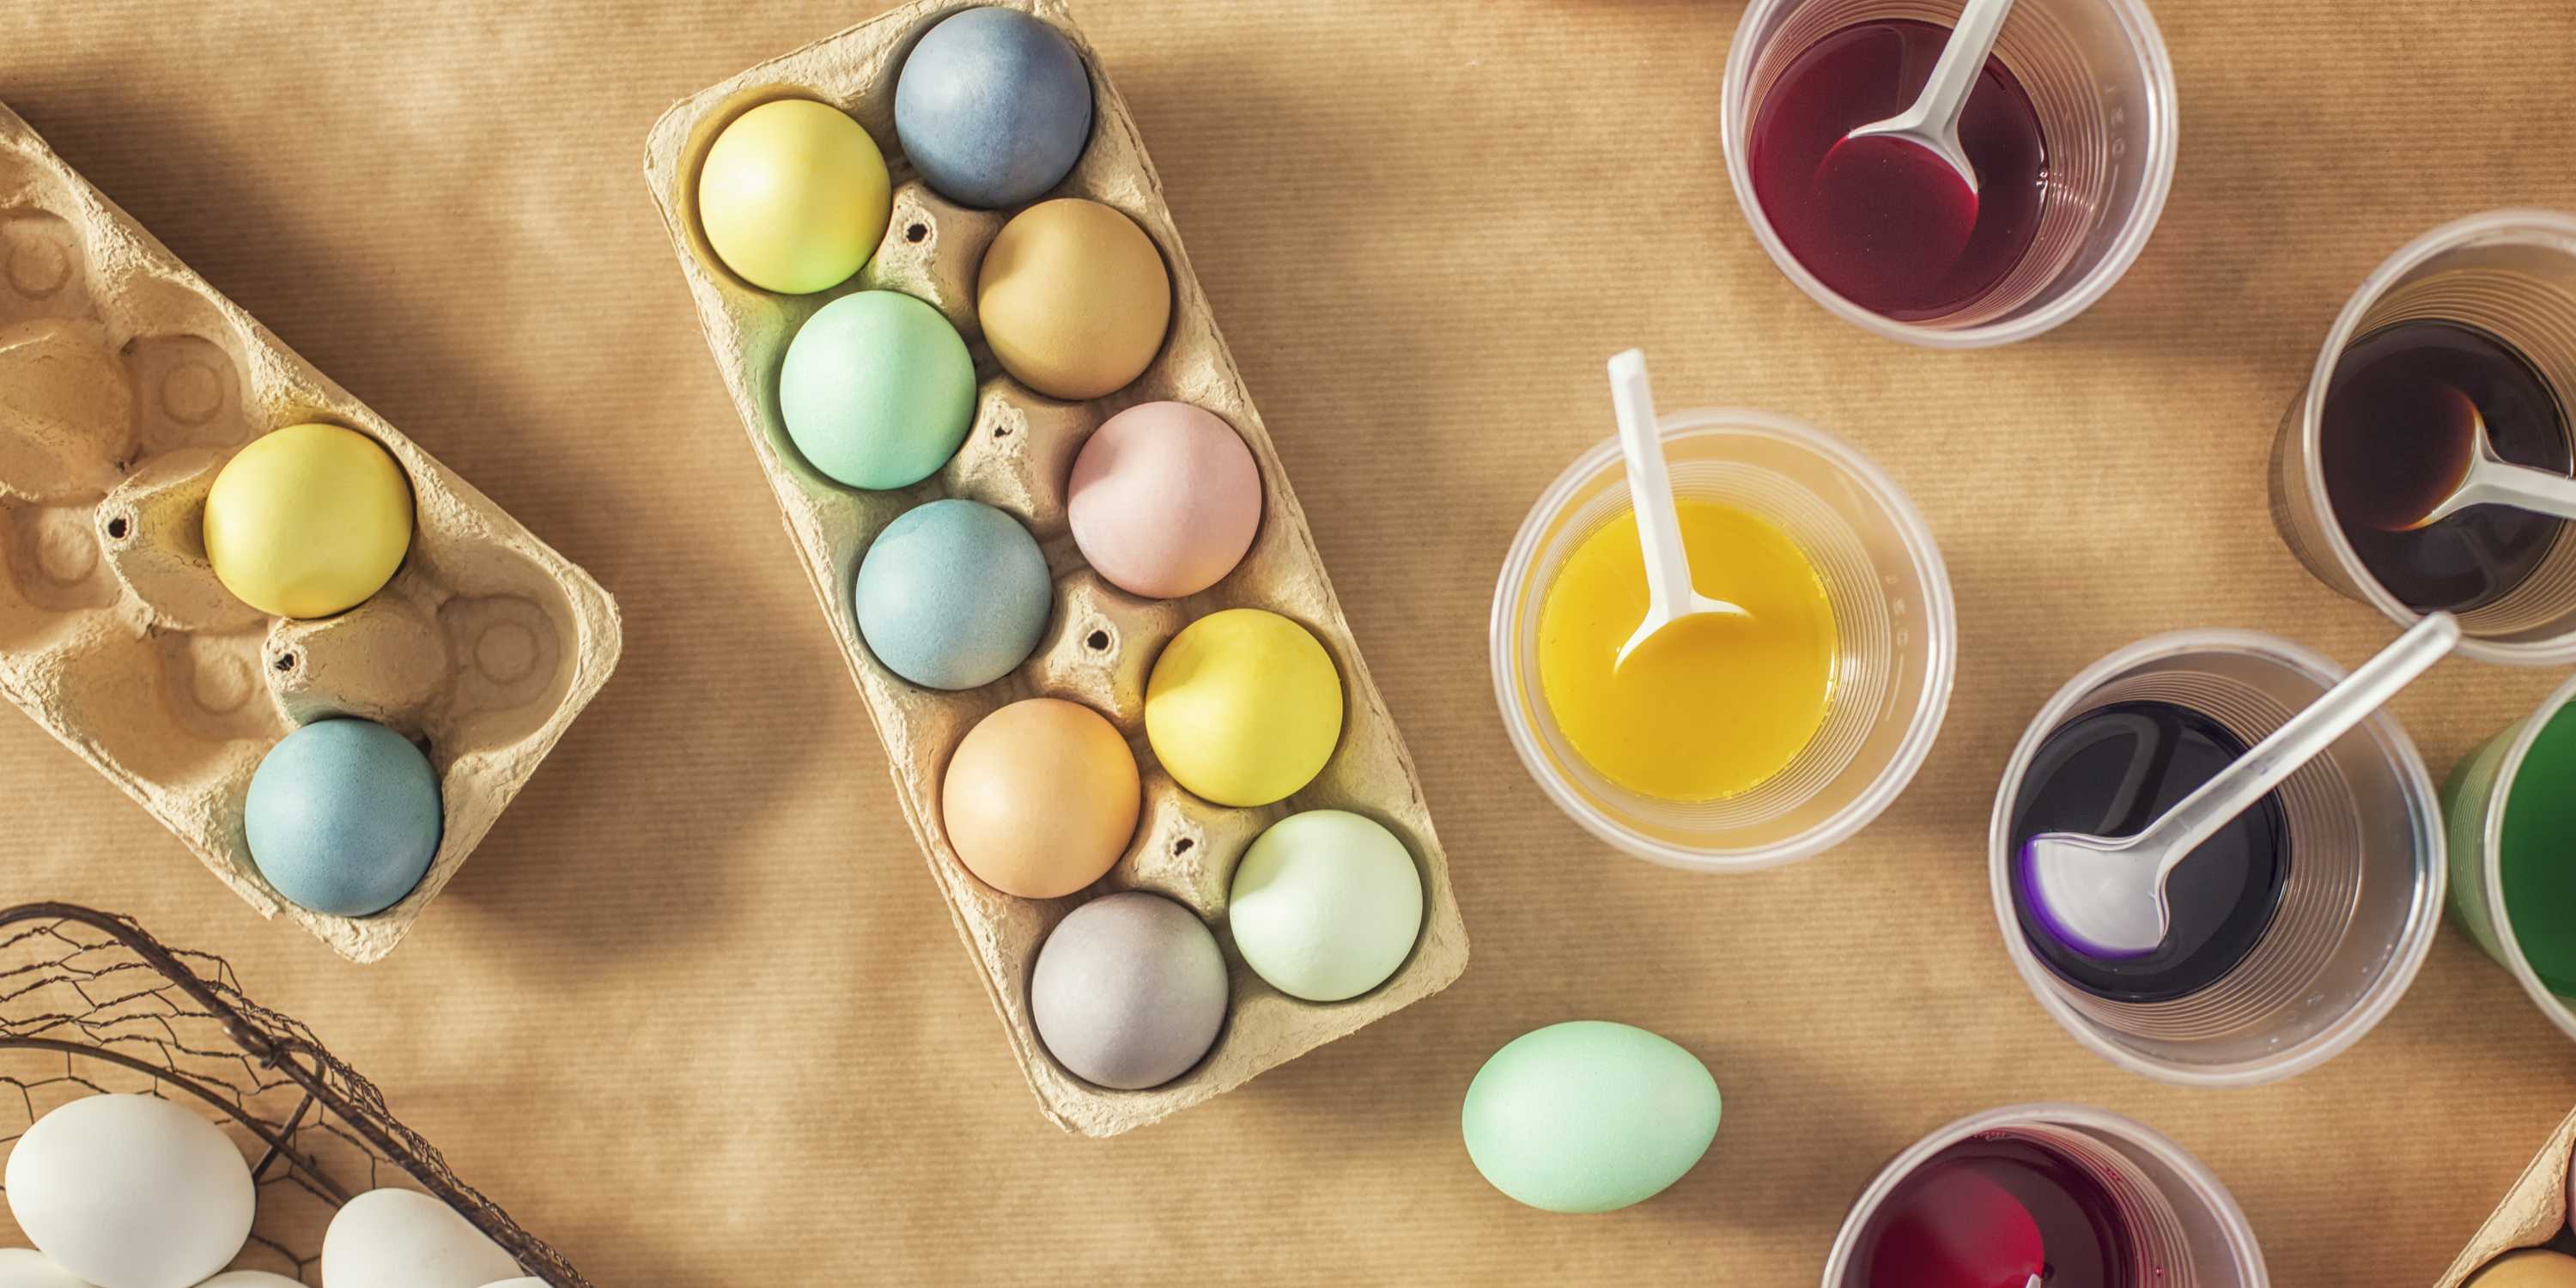 Можно красить яйца красками. Краска для яиц. Натуральные краски для яиц. Краски для окрашивания яиц. Окрашивание яиц пищевыми красителями.